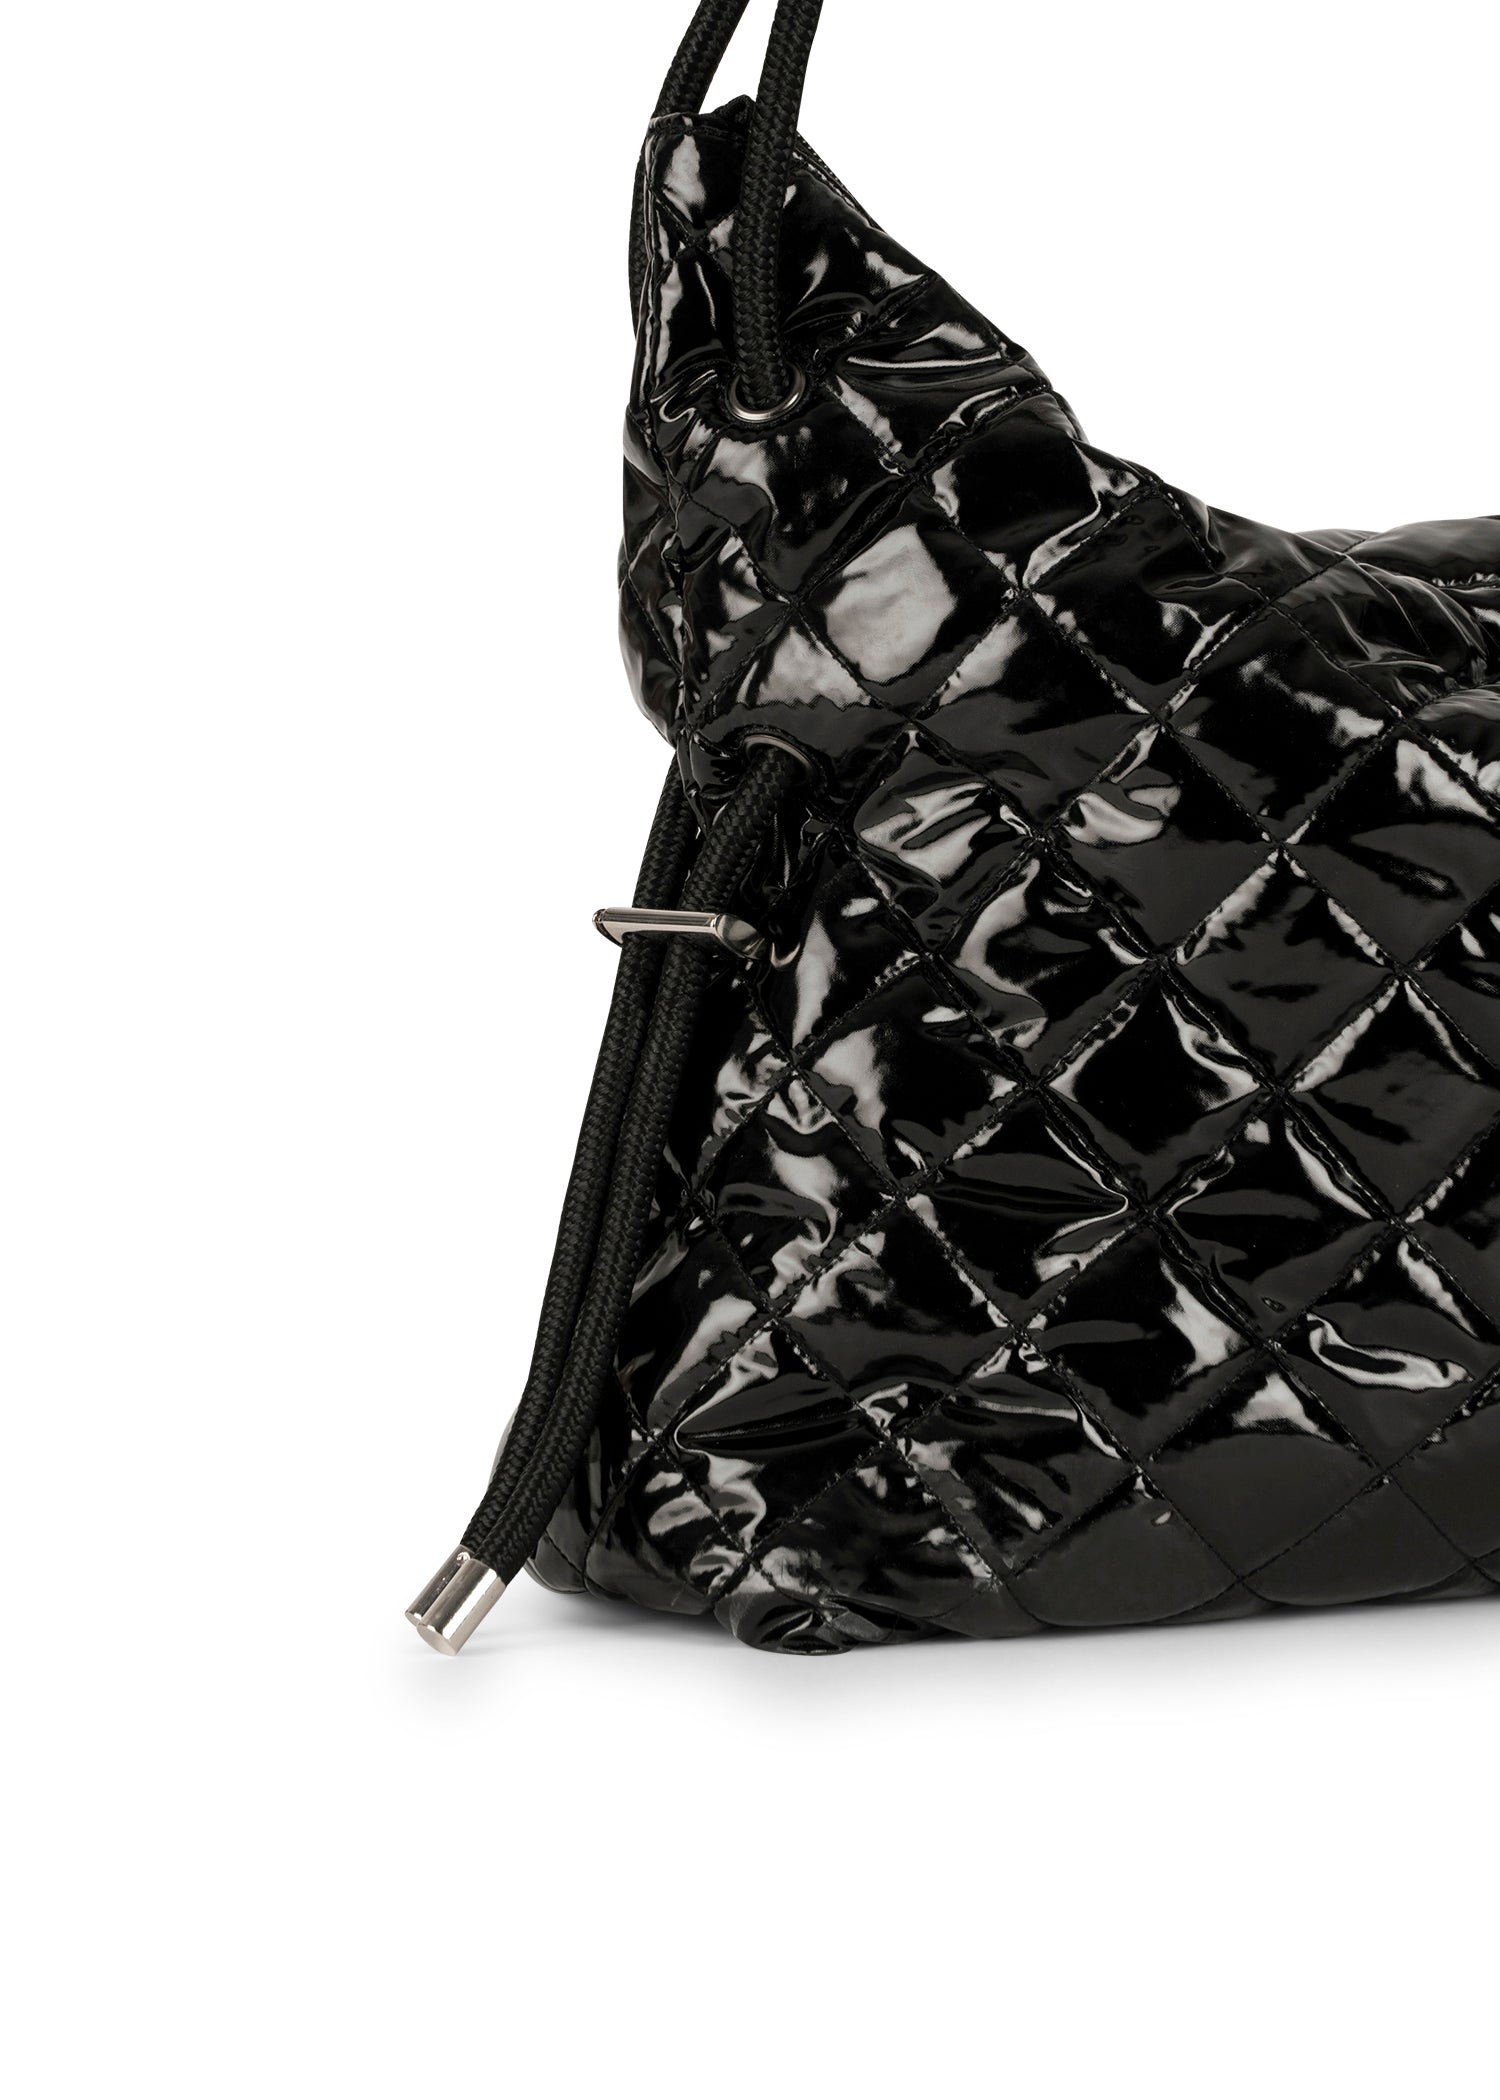 Stacey Noir Convertible Shoulder Bag